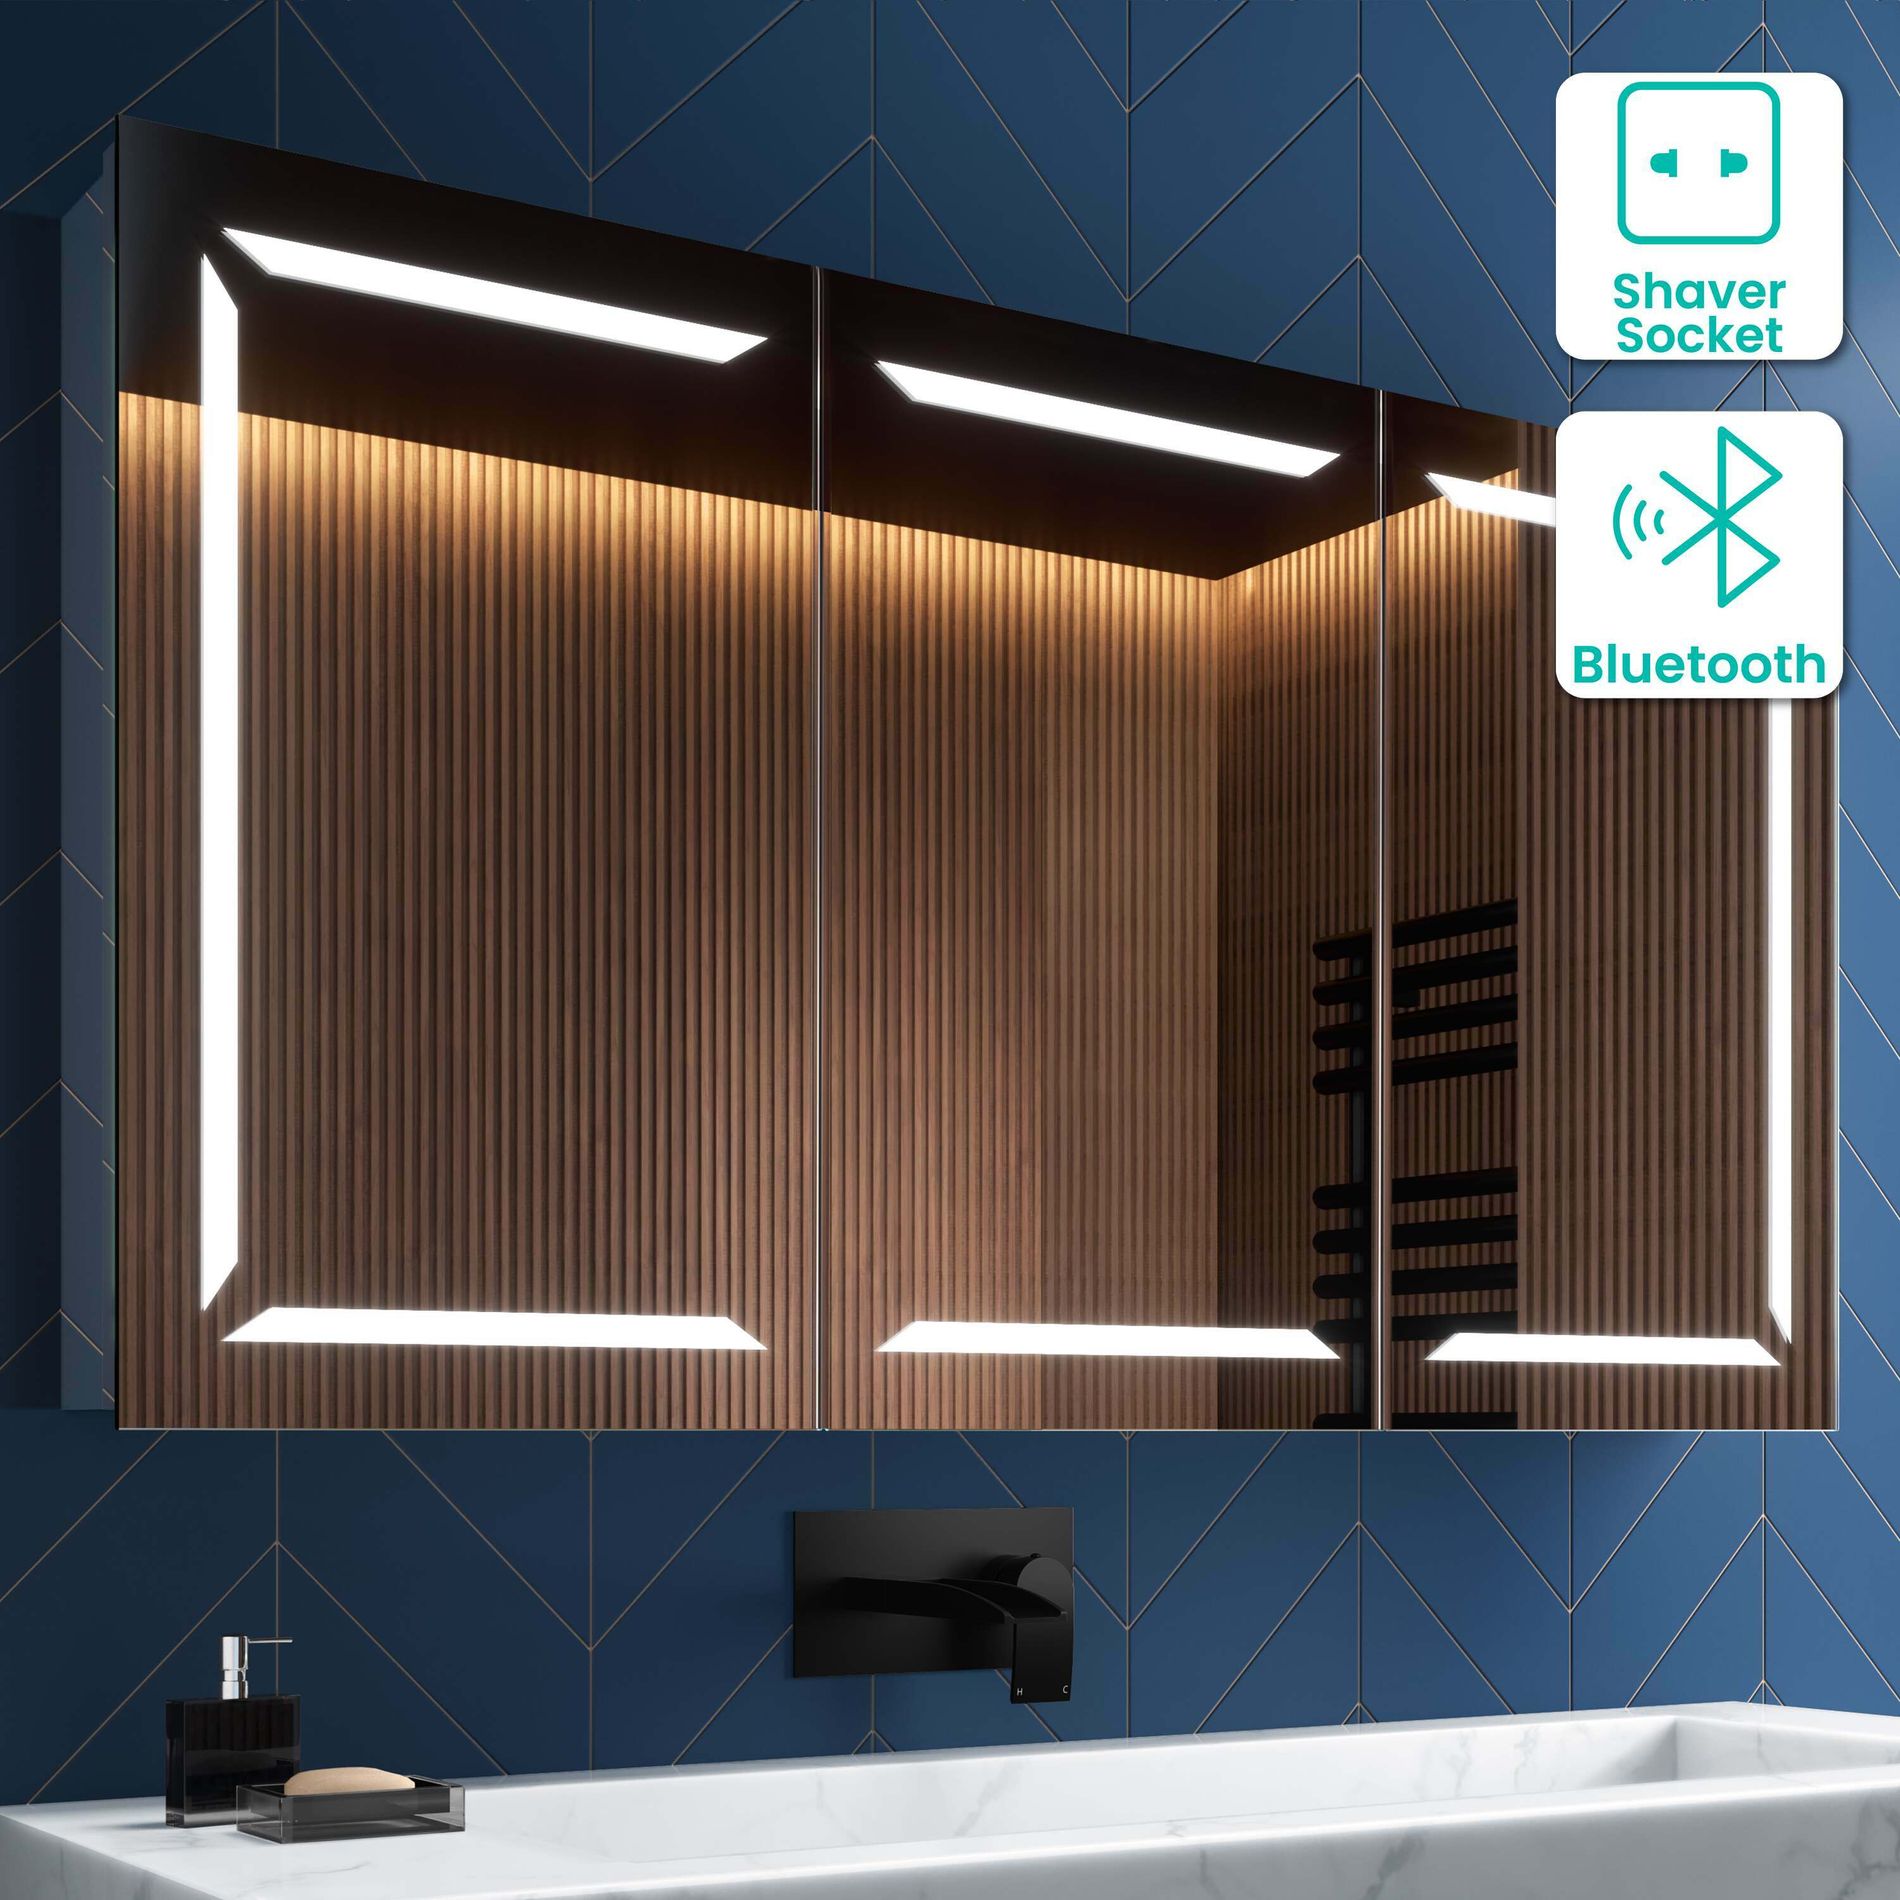 Haisley Illuminated Led Mirror Cabinet, Led Bathroom Mirror With Demister And Shaver Socket Bluetooth